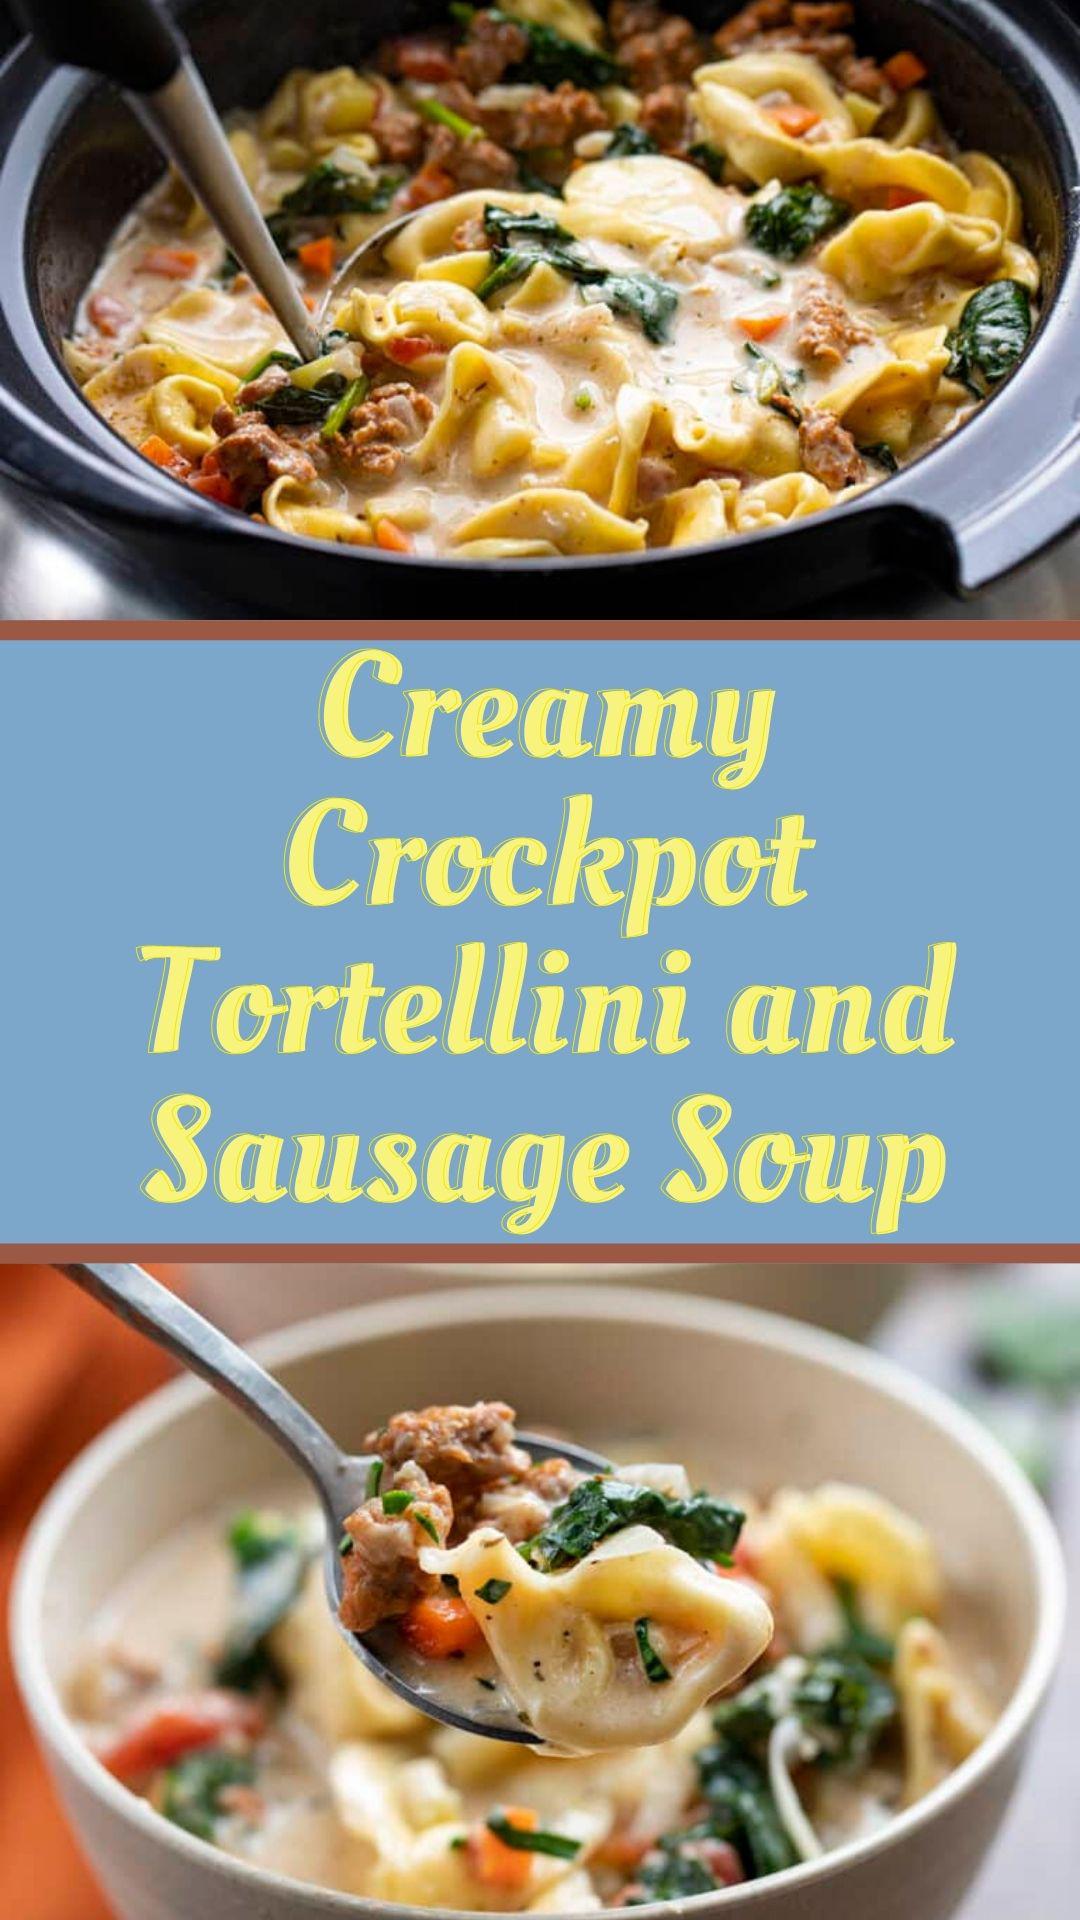 Creamy Crockpot Tortellini and Sausage Soup